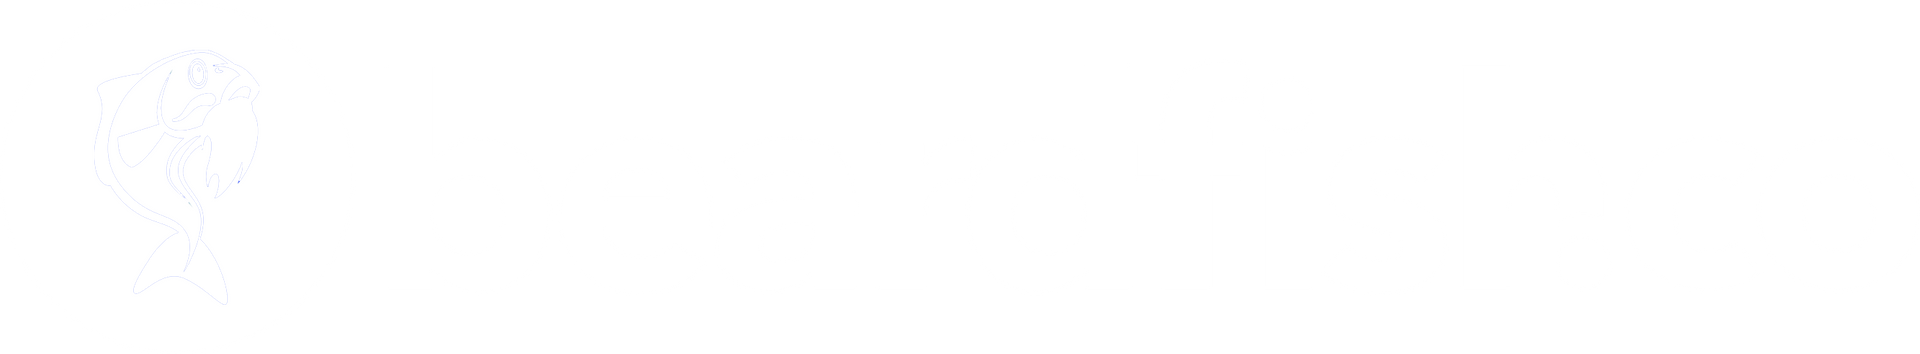 beardfish.co logo